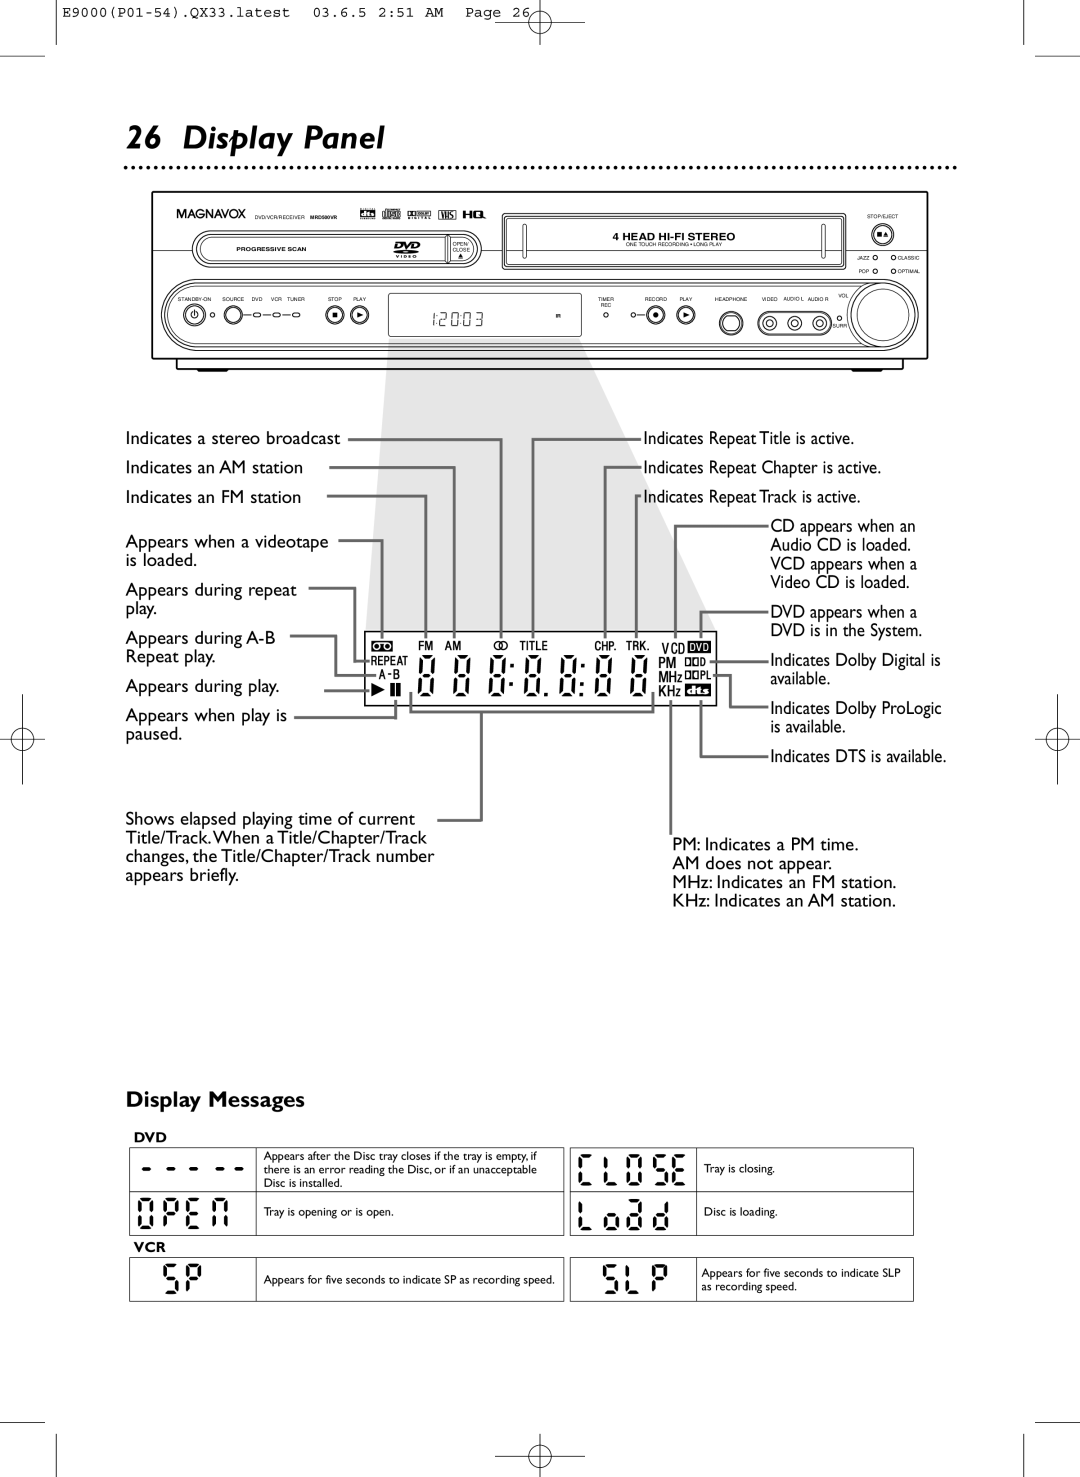 Magnavox MRD500VR owner manual Display Panel, Display Messages 